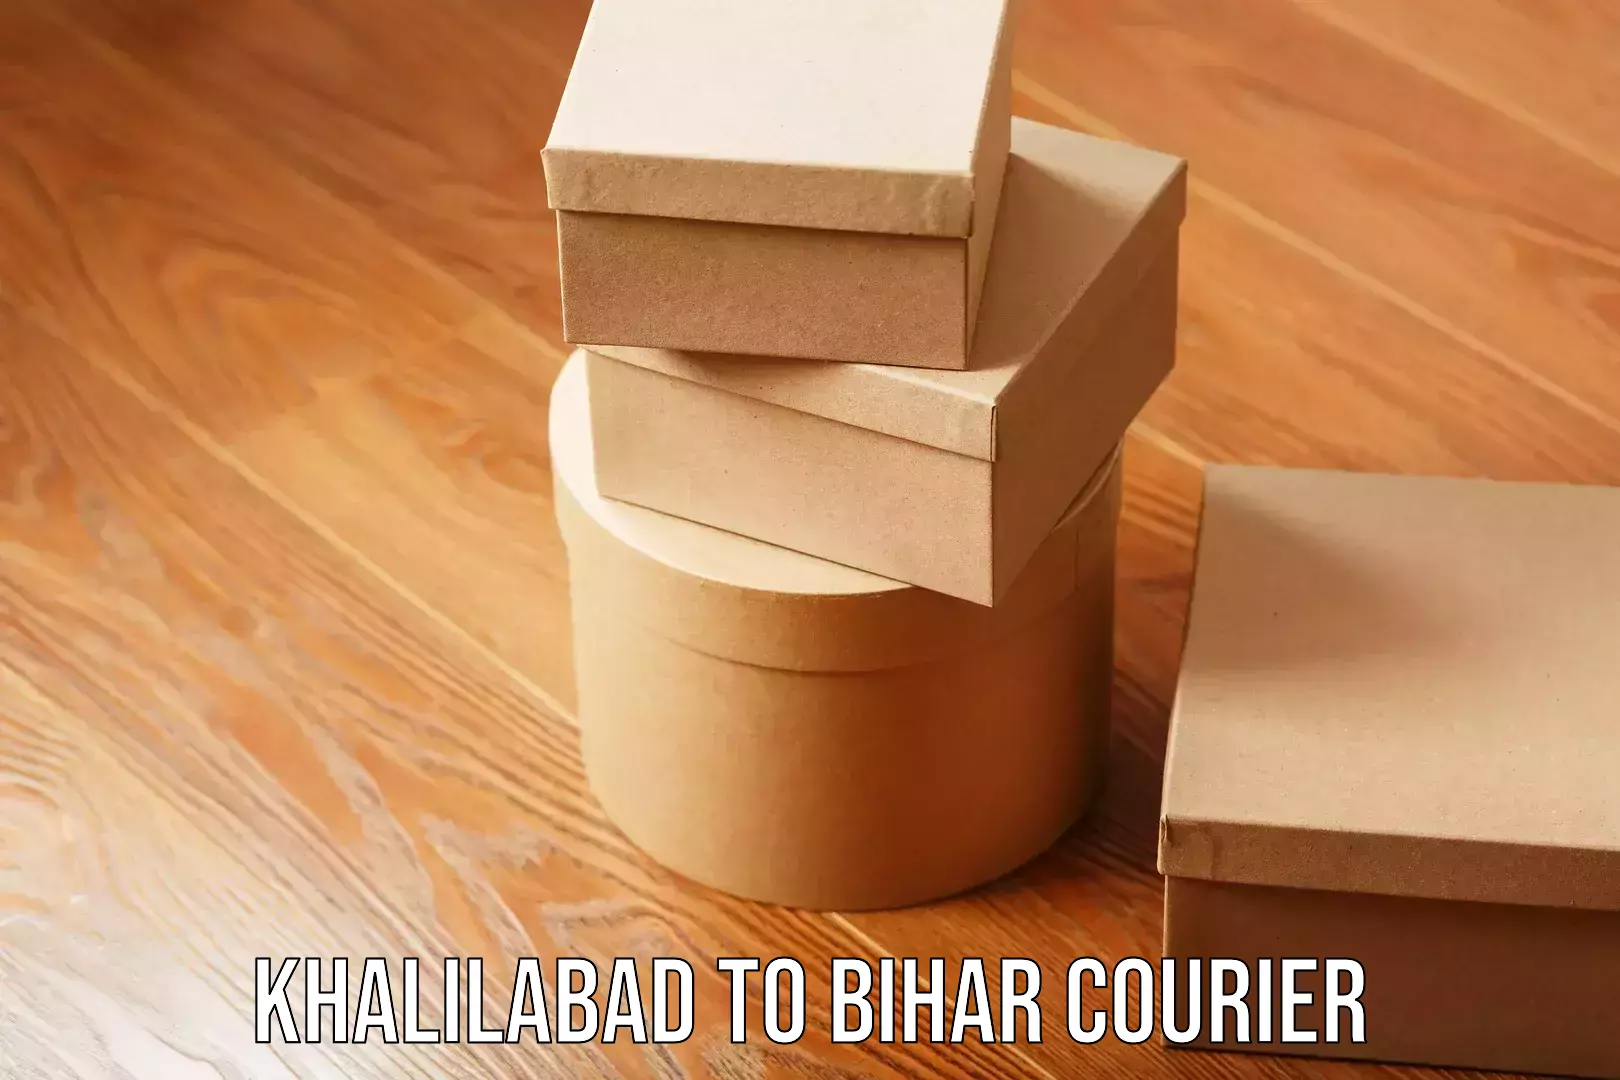 Trusted moving company Khalilabad to Bihar